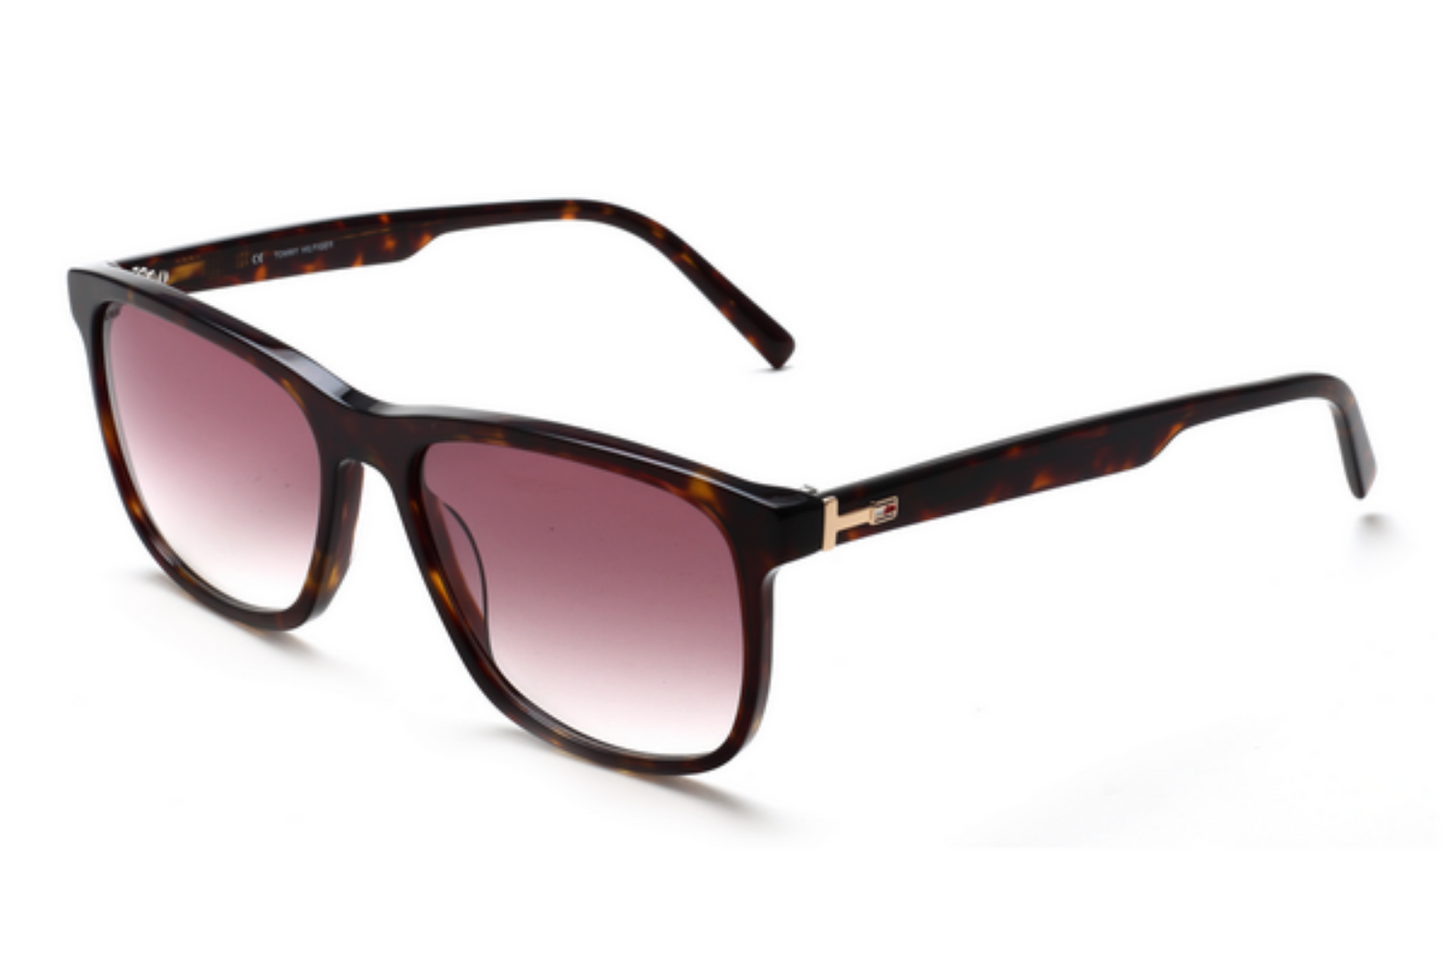 Sunglasses Tommy Hilfiger - Frameless aviator sunglasses - TH1598S010KU